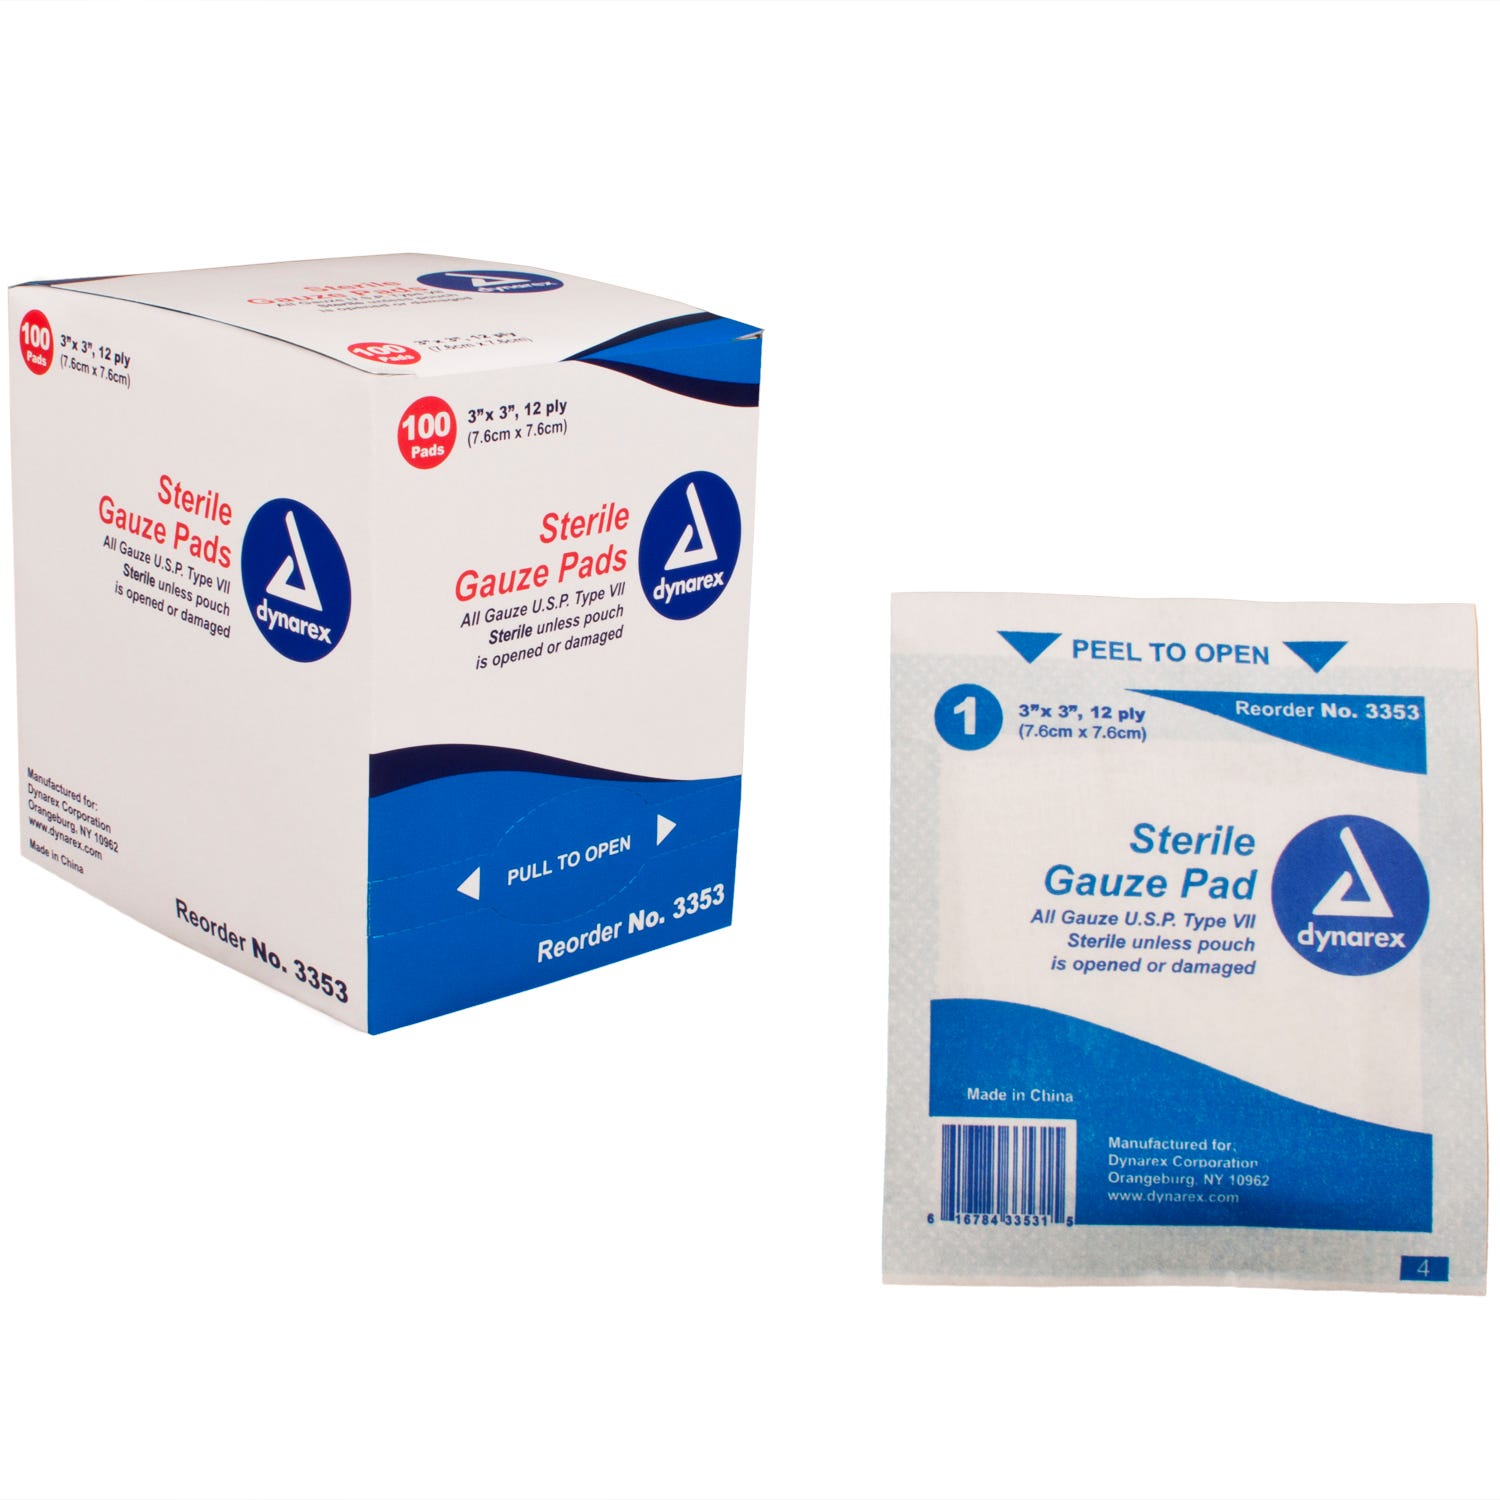 Sterile Gauze Pads - 3" x 3", 12-ply, 100/Box